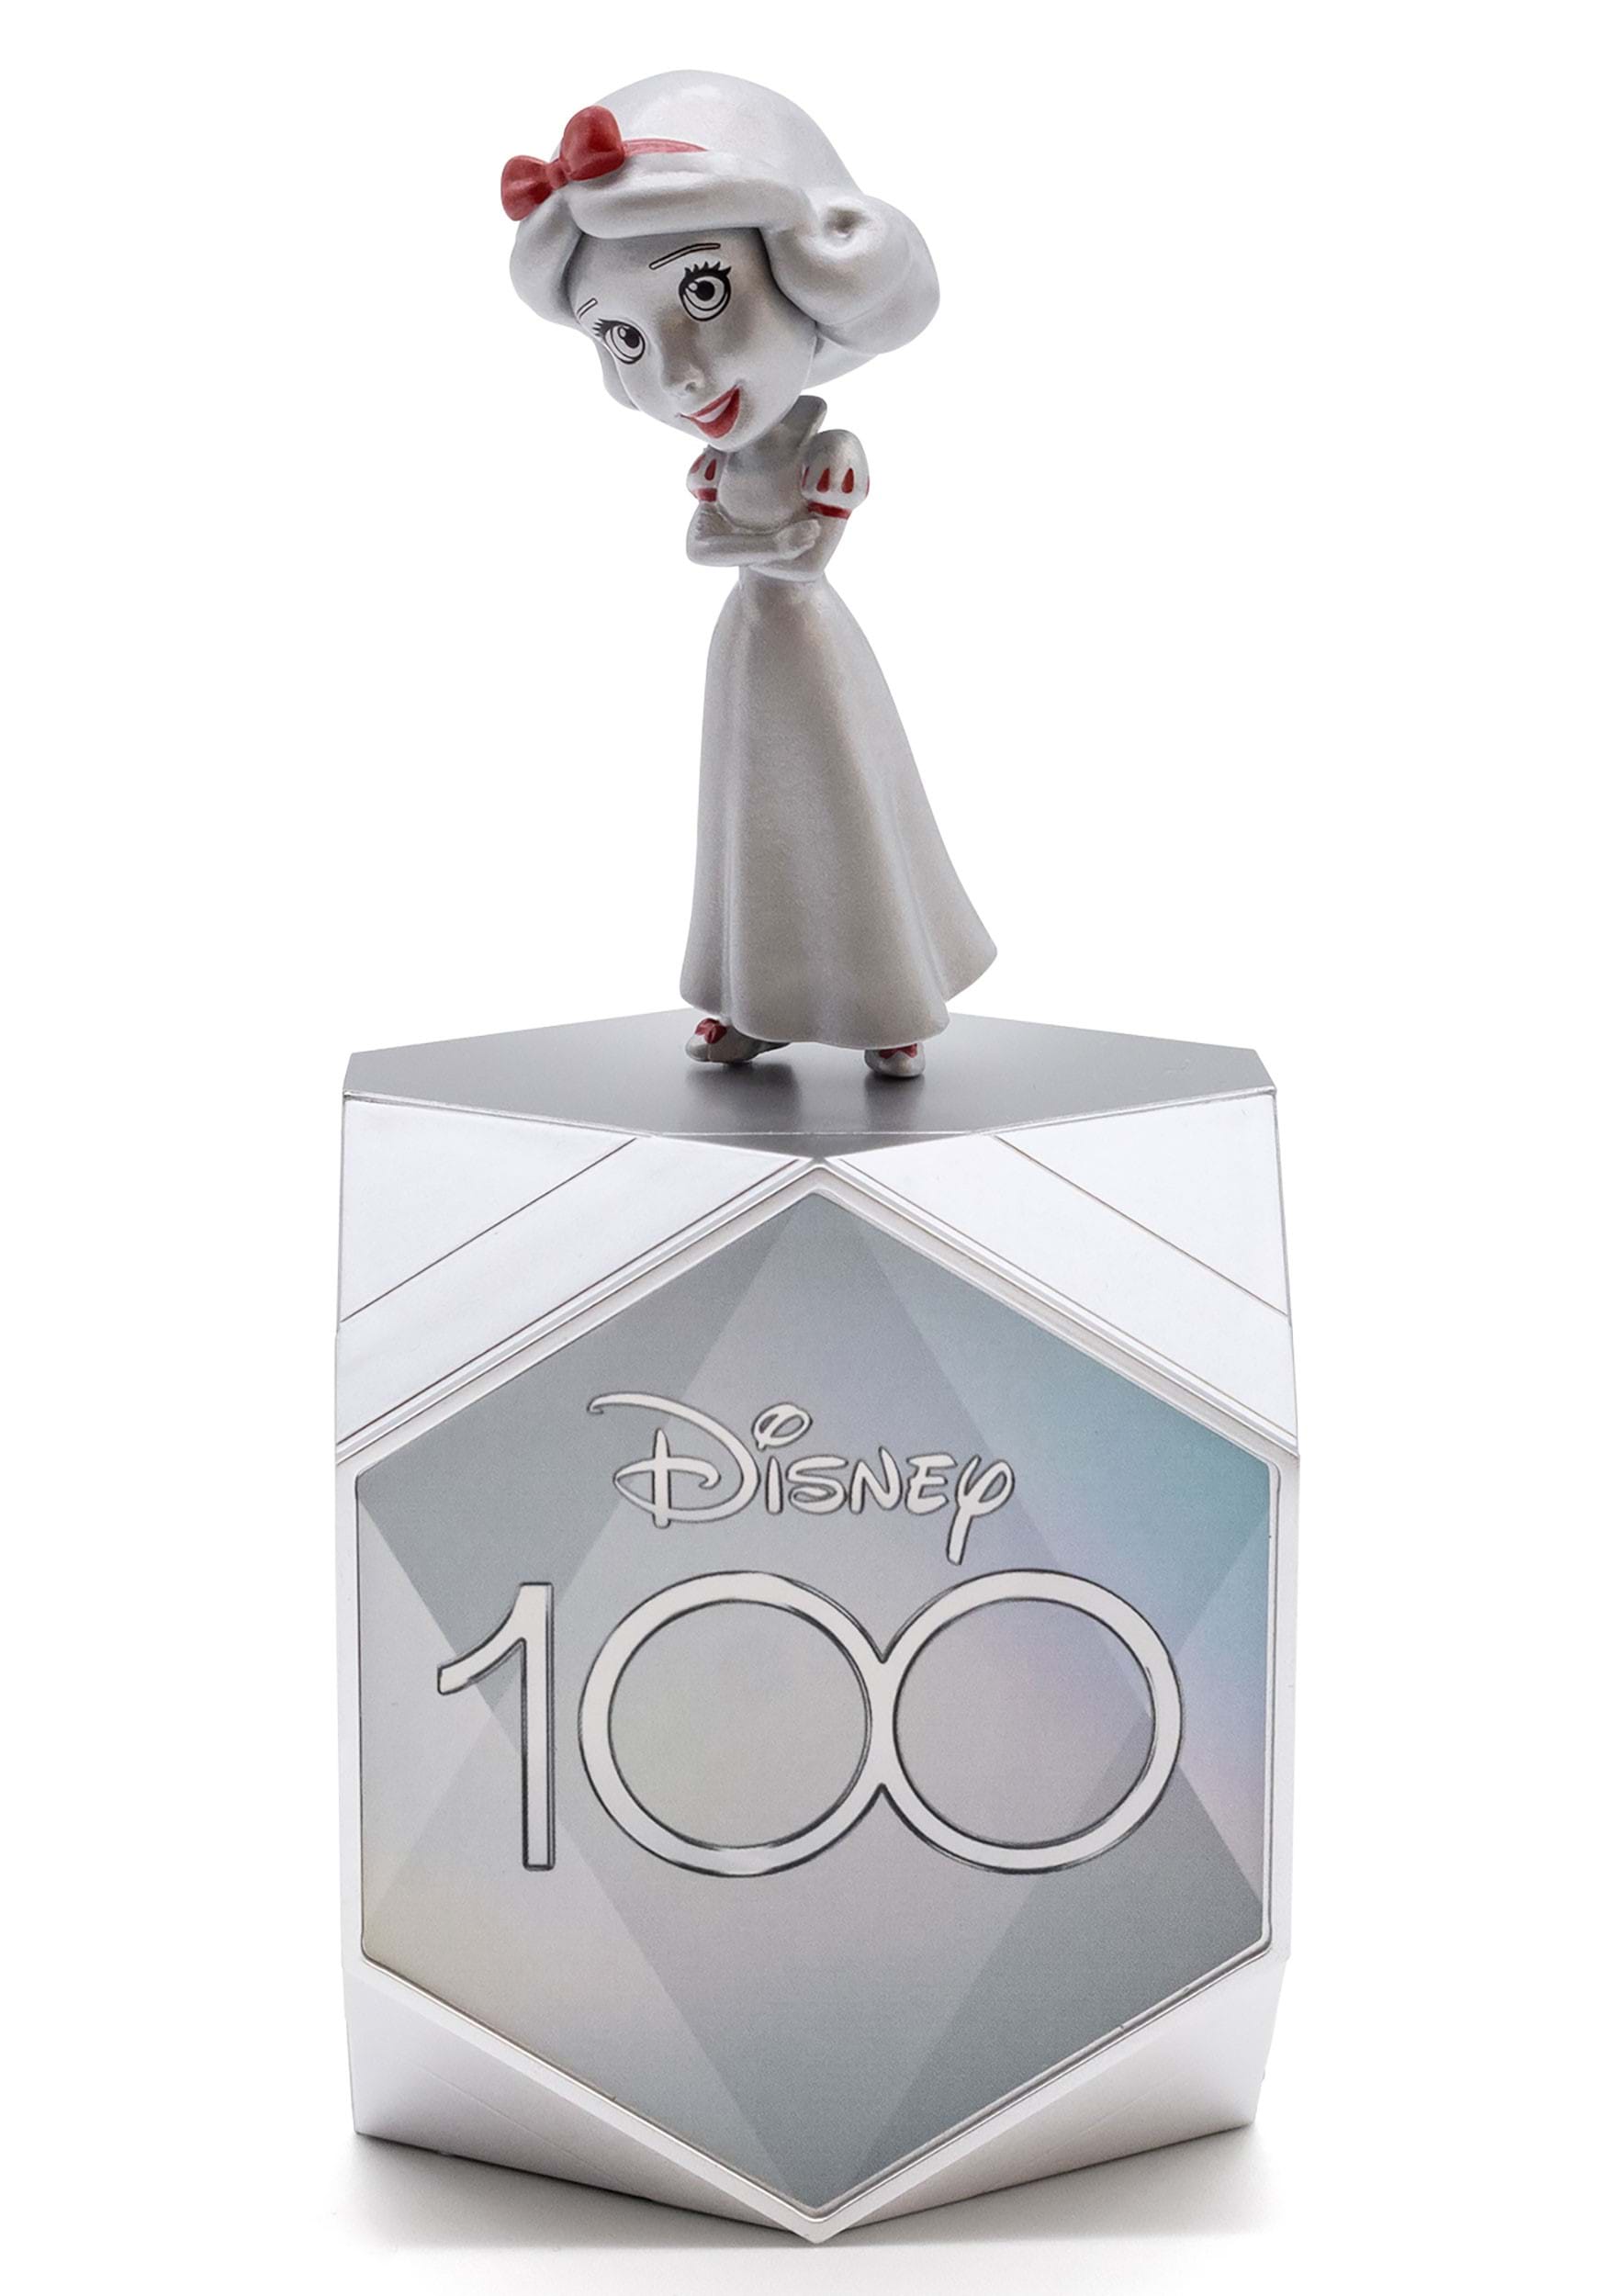 Genuine Disney Blind Box Figurine 100th Anniversary Surprise